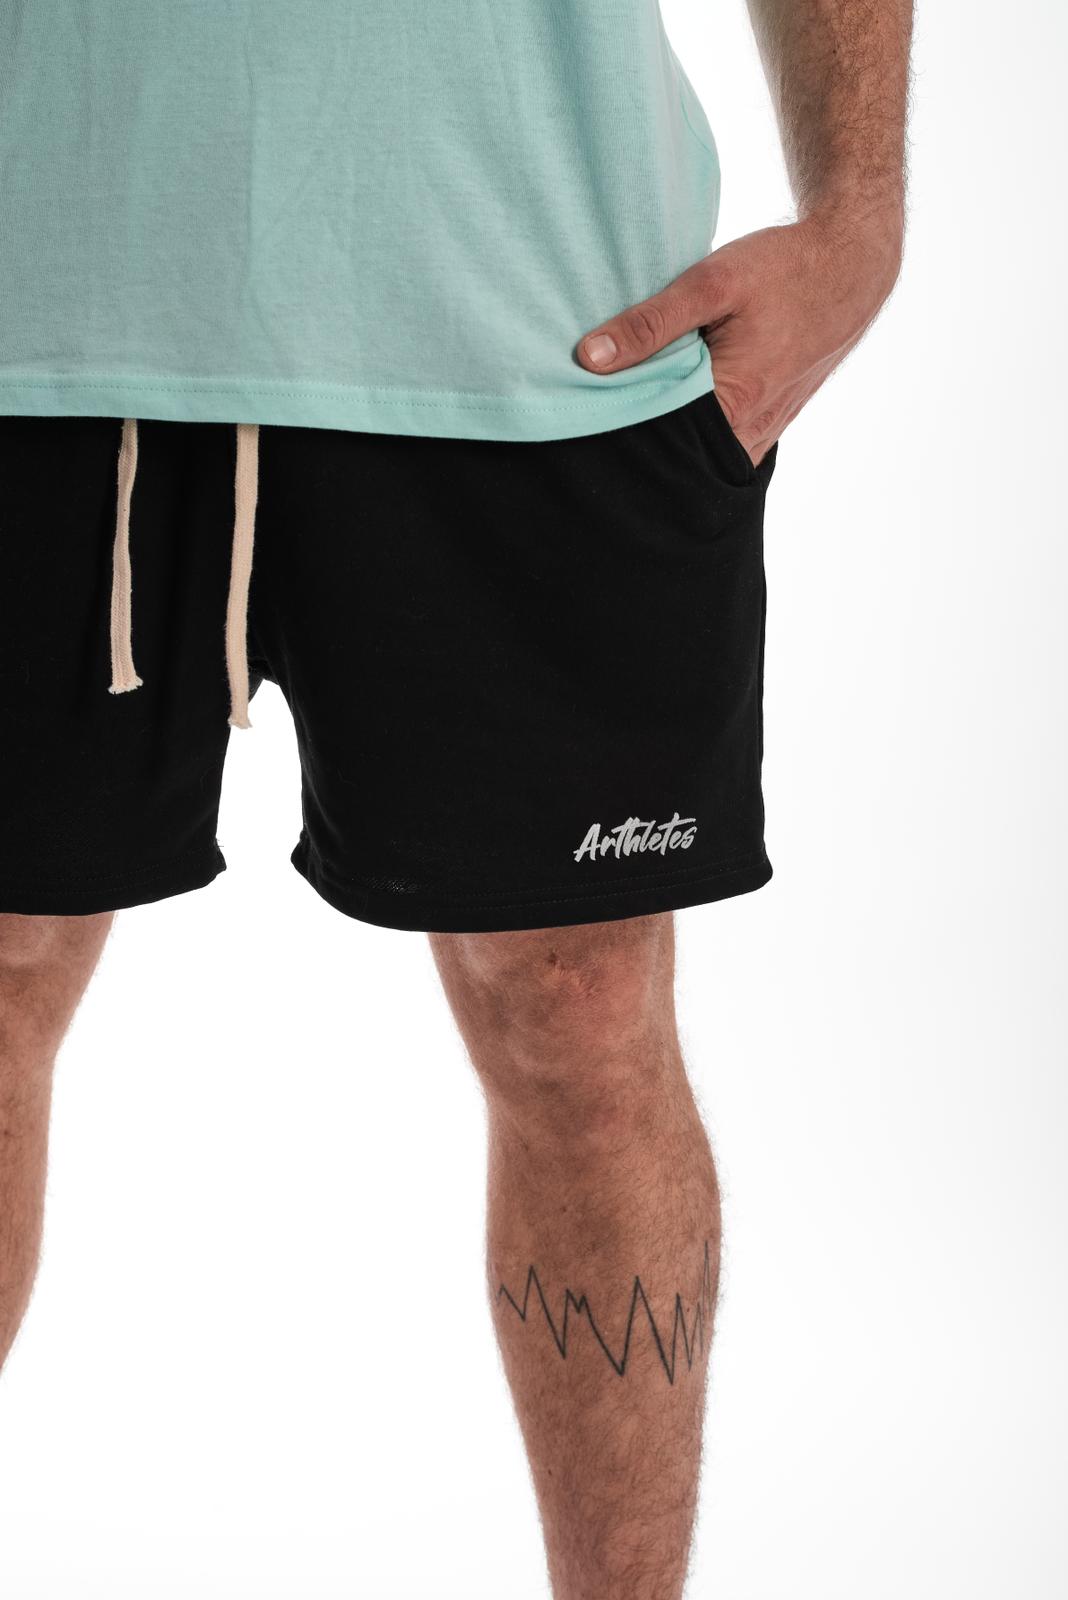 Arthletes shorts pants- Black